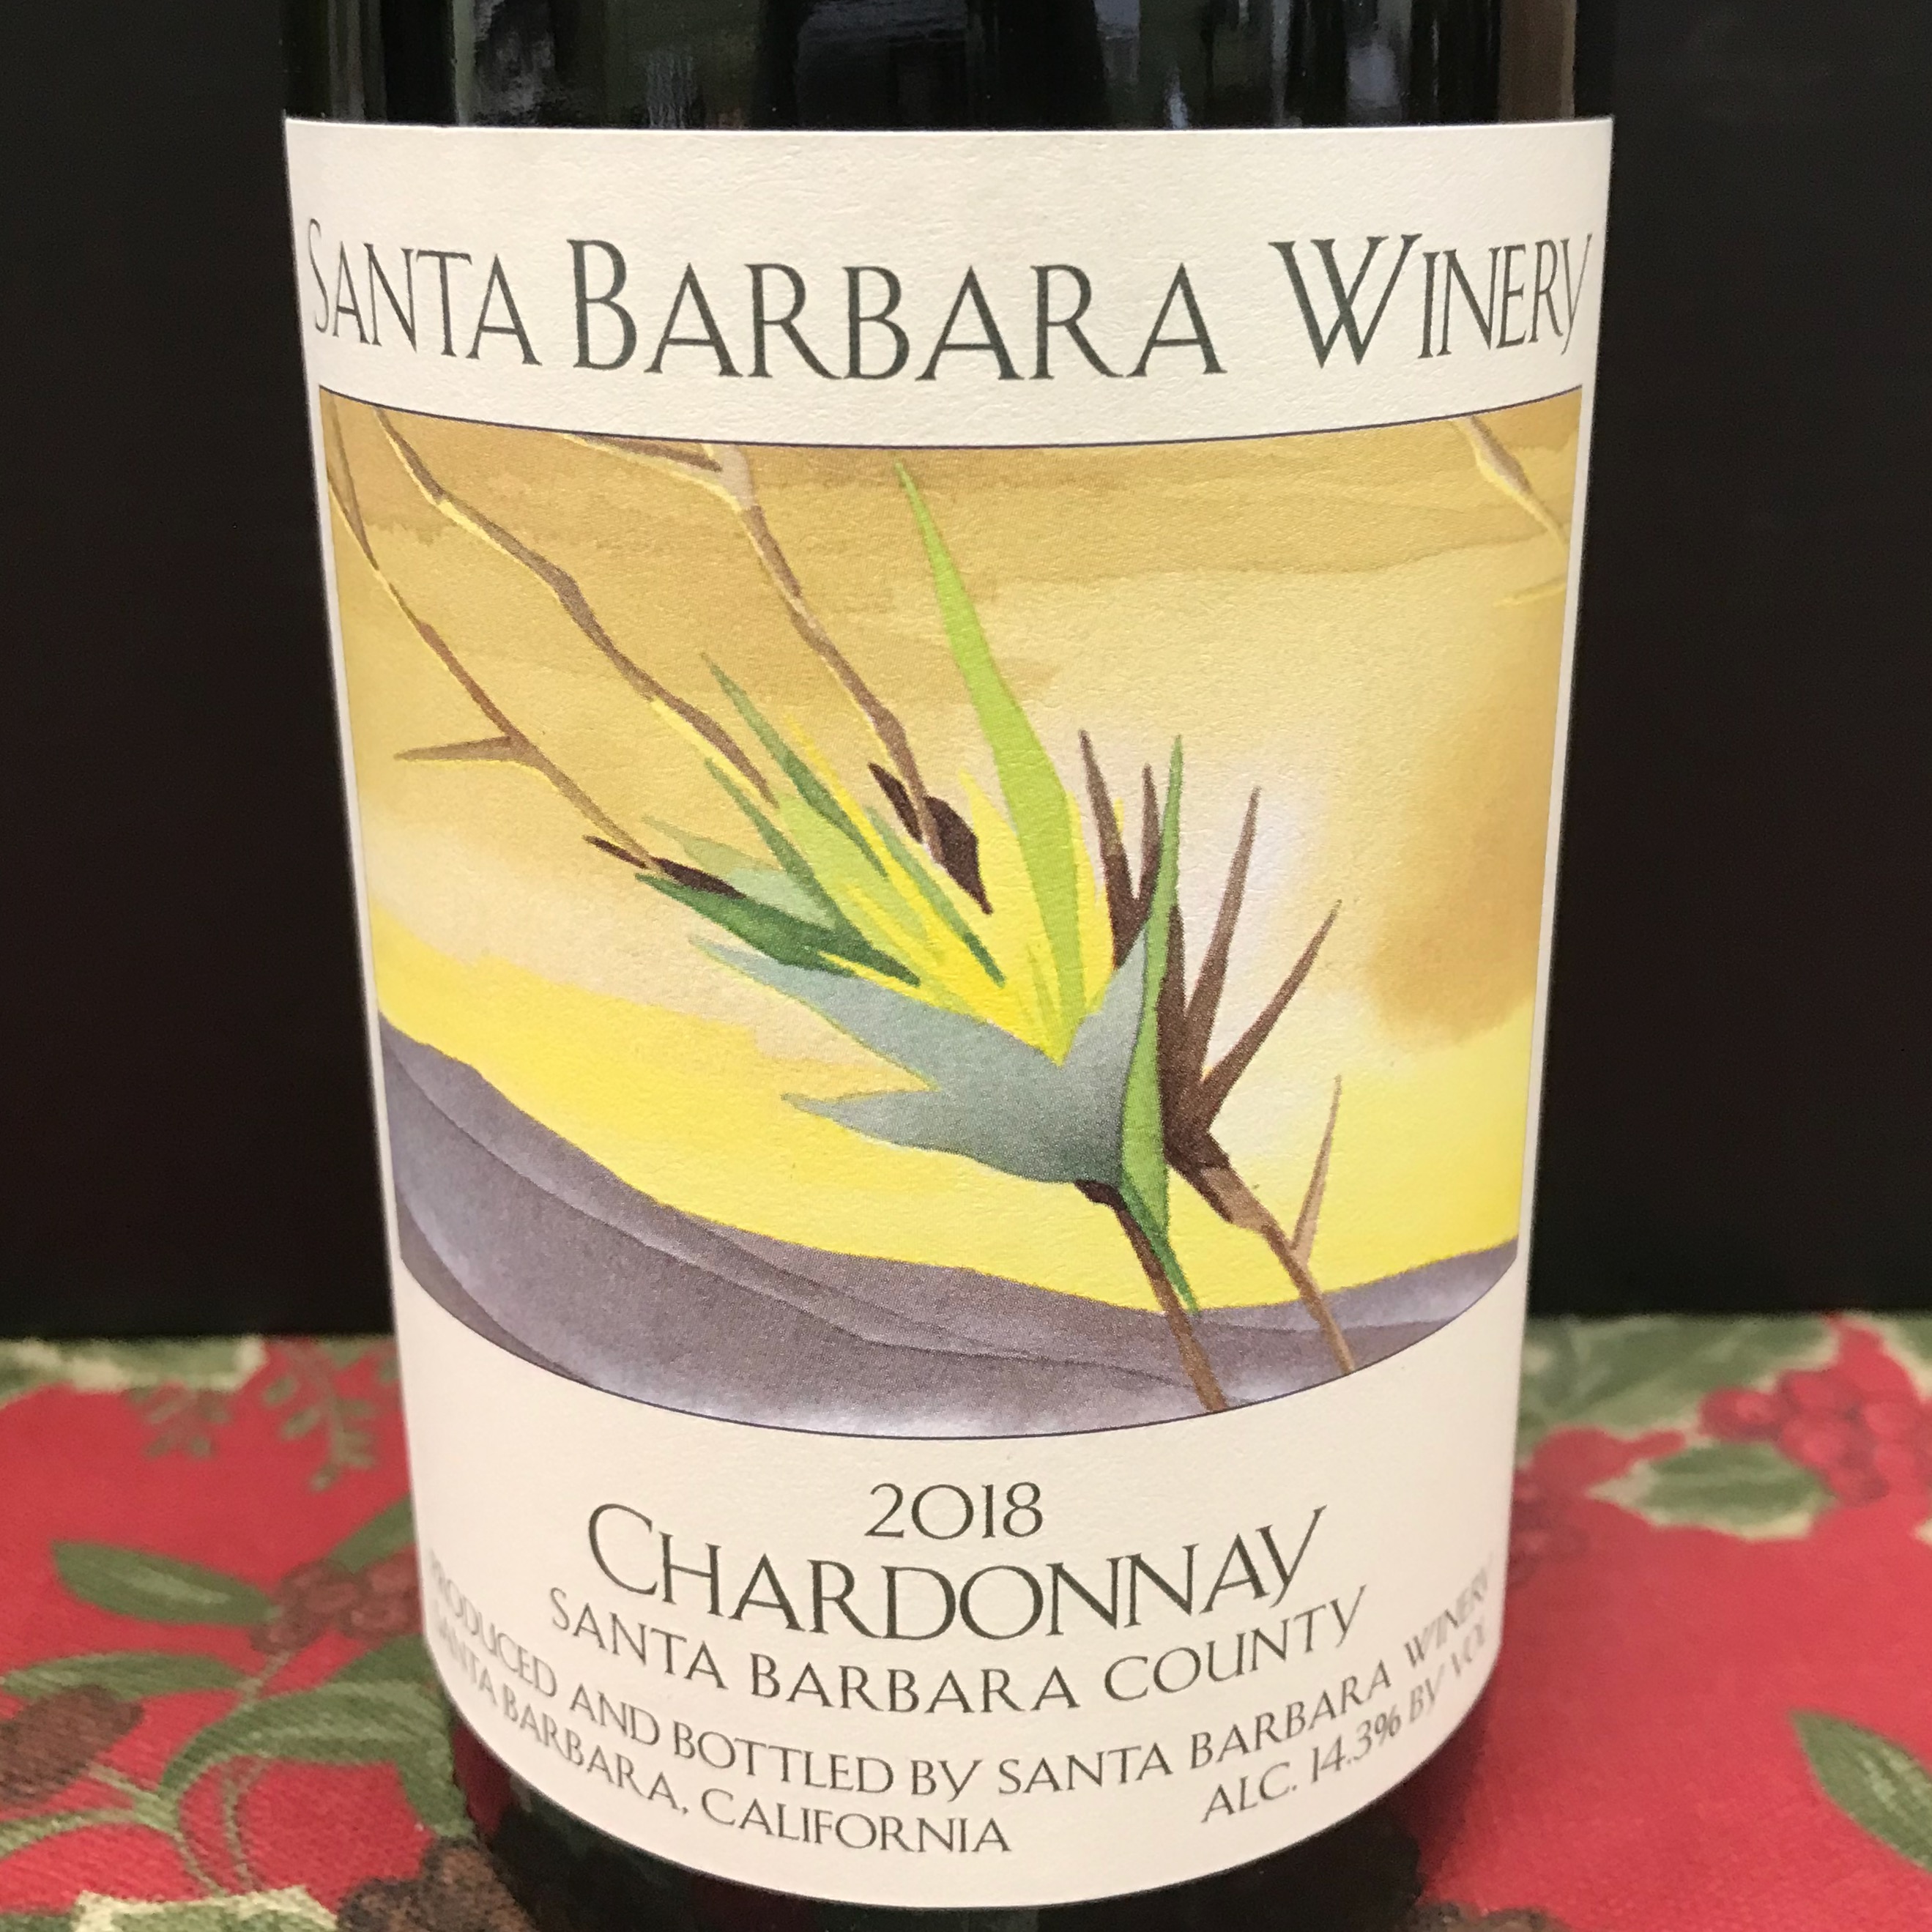 Santa Barbara Winery Santa Barbara County Chardonnay 2018